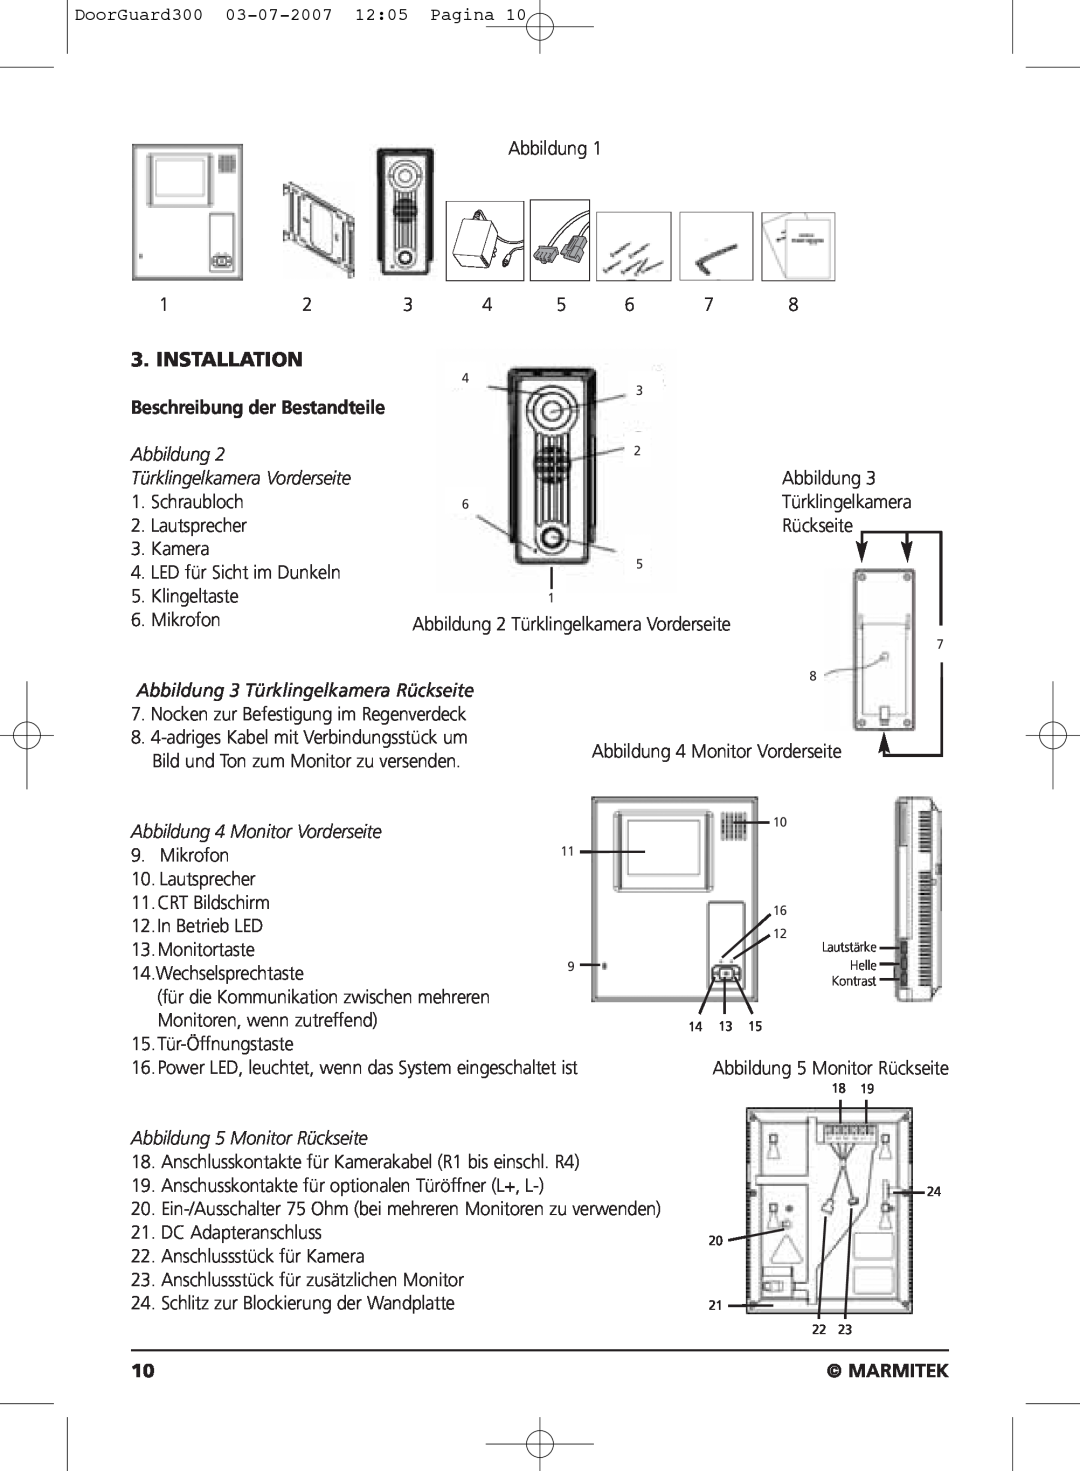 Marmitek DOORGUARD300TM user manual Installation, Abbildung 123, Marmitek 